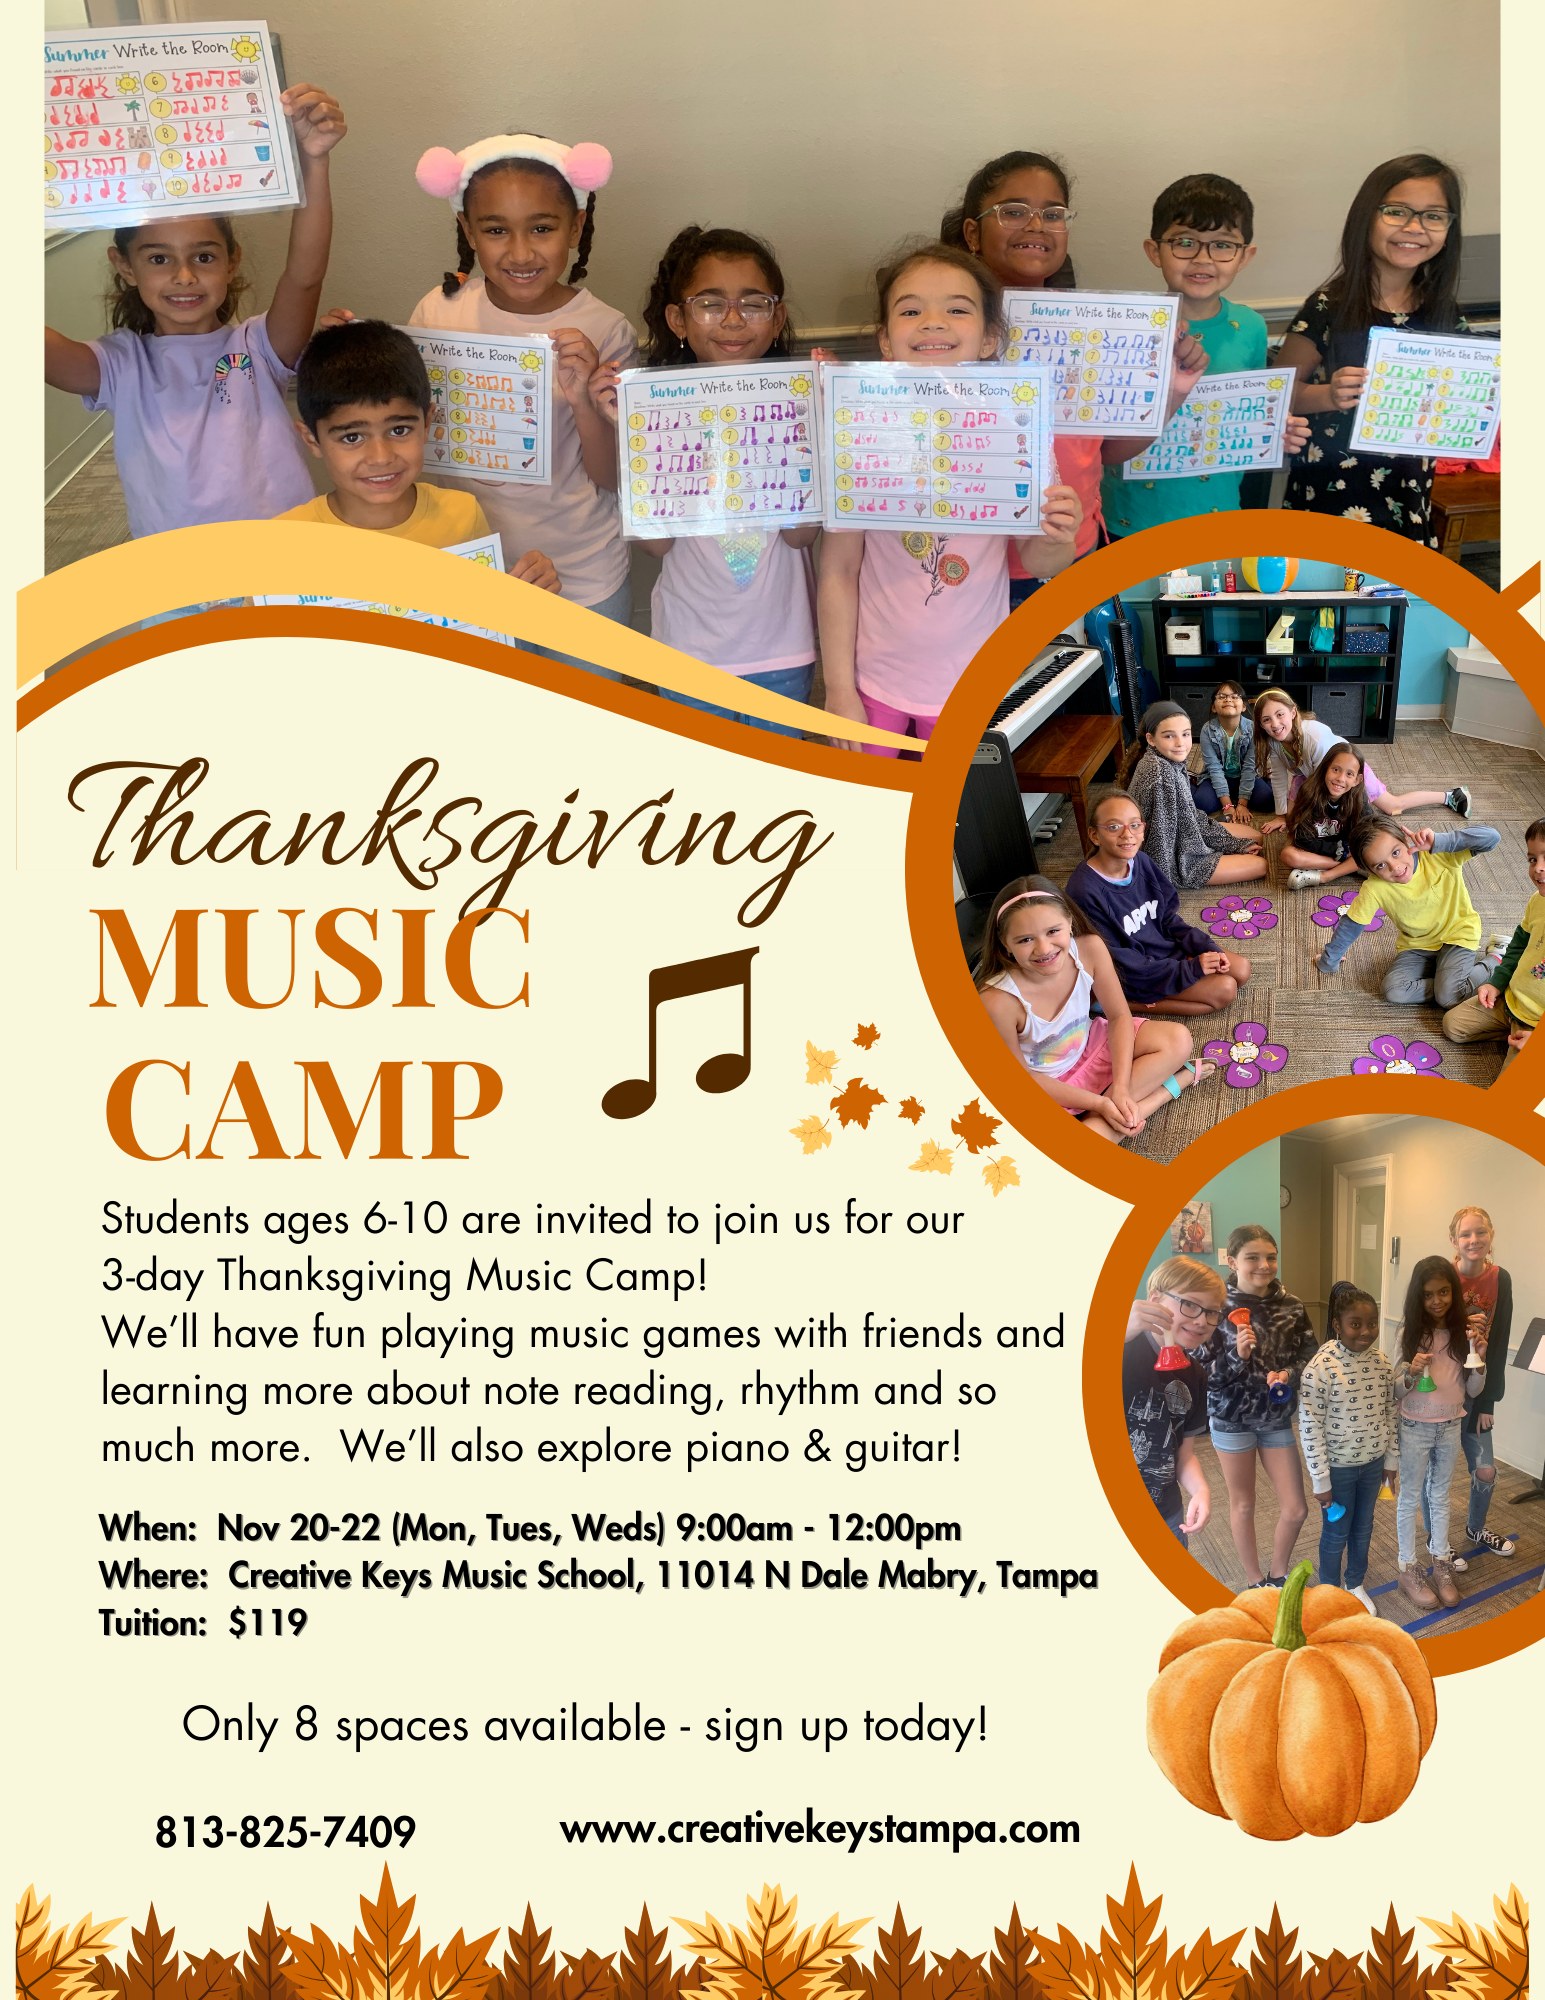 thanksgiving music camp flyer carrollwood tampa piano guitar fun